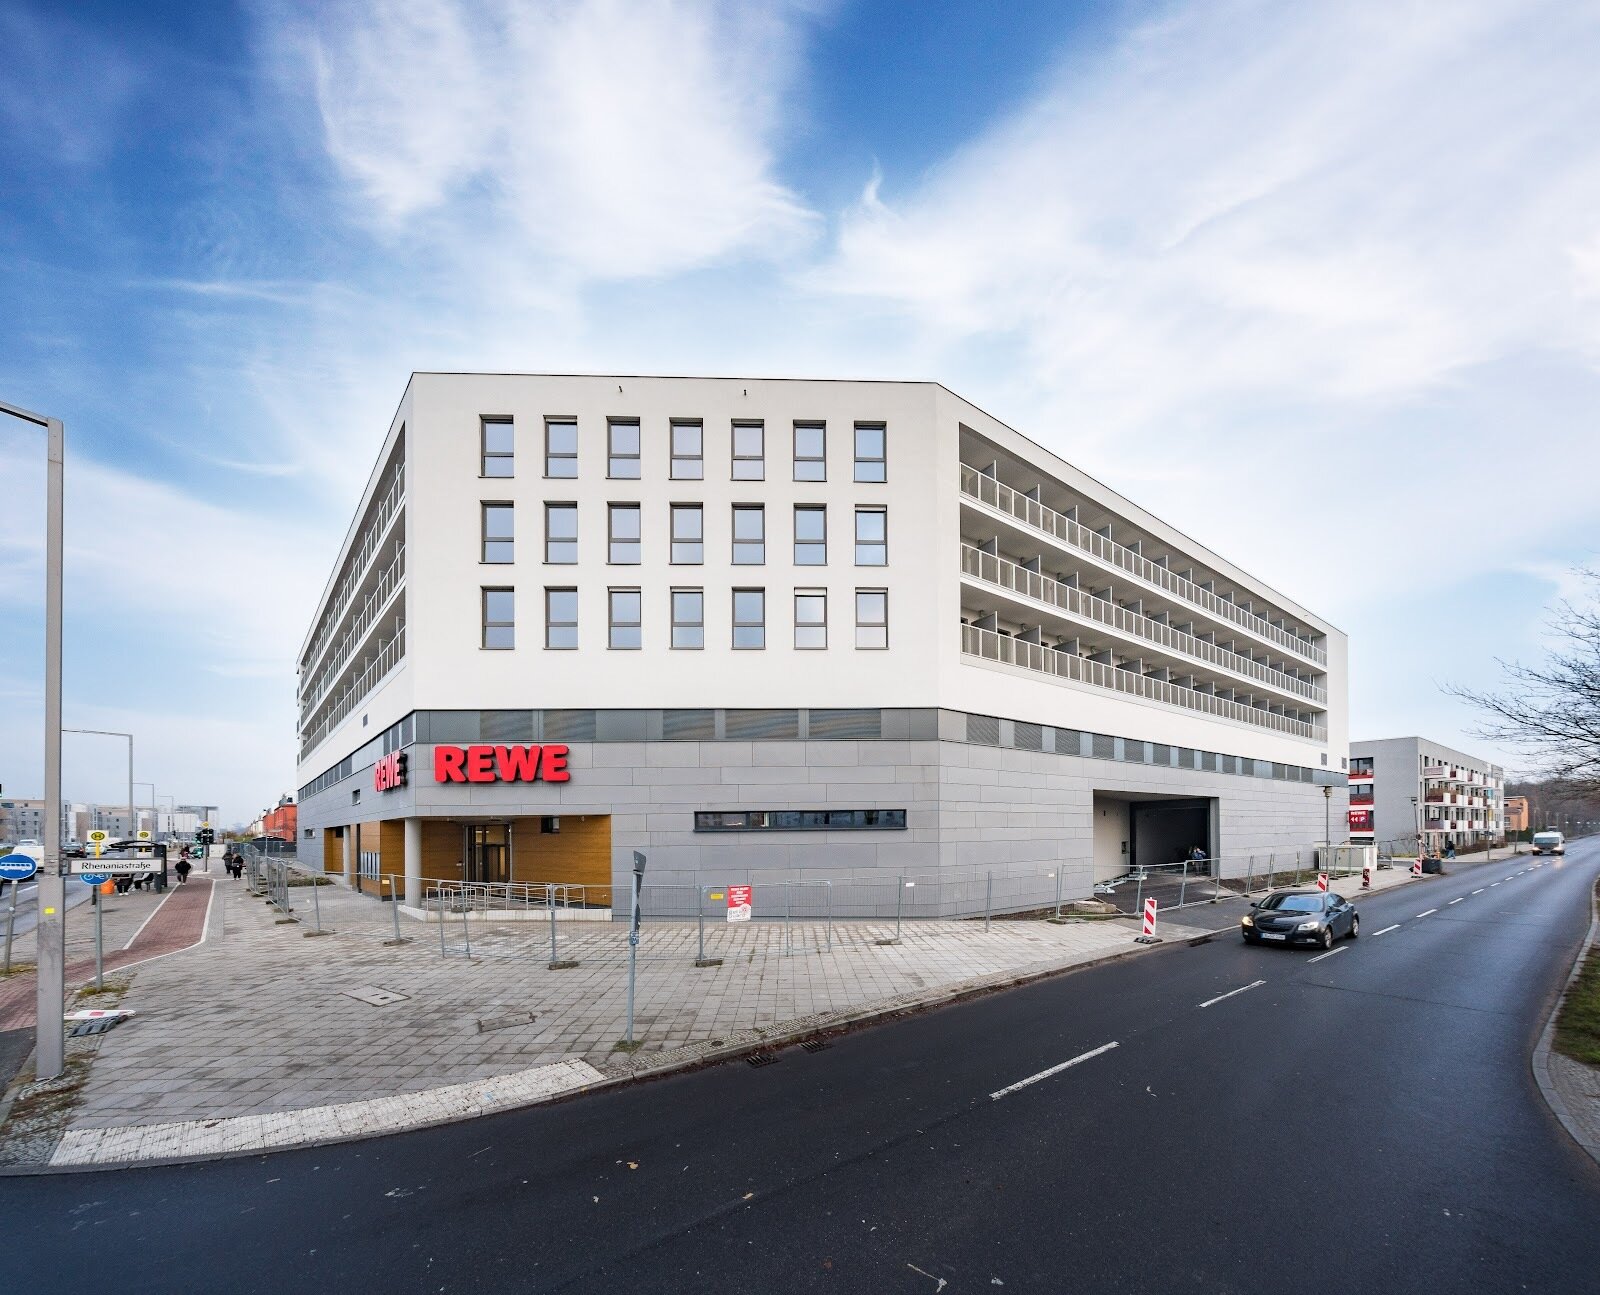 Bürogebäude zur Miete Provisionsfrei 729,60 € 60,8 m² Bürofläche Plauer See Str. 17 Haselhorst Berlin 13599